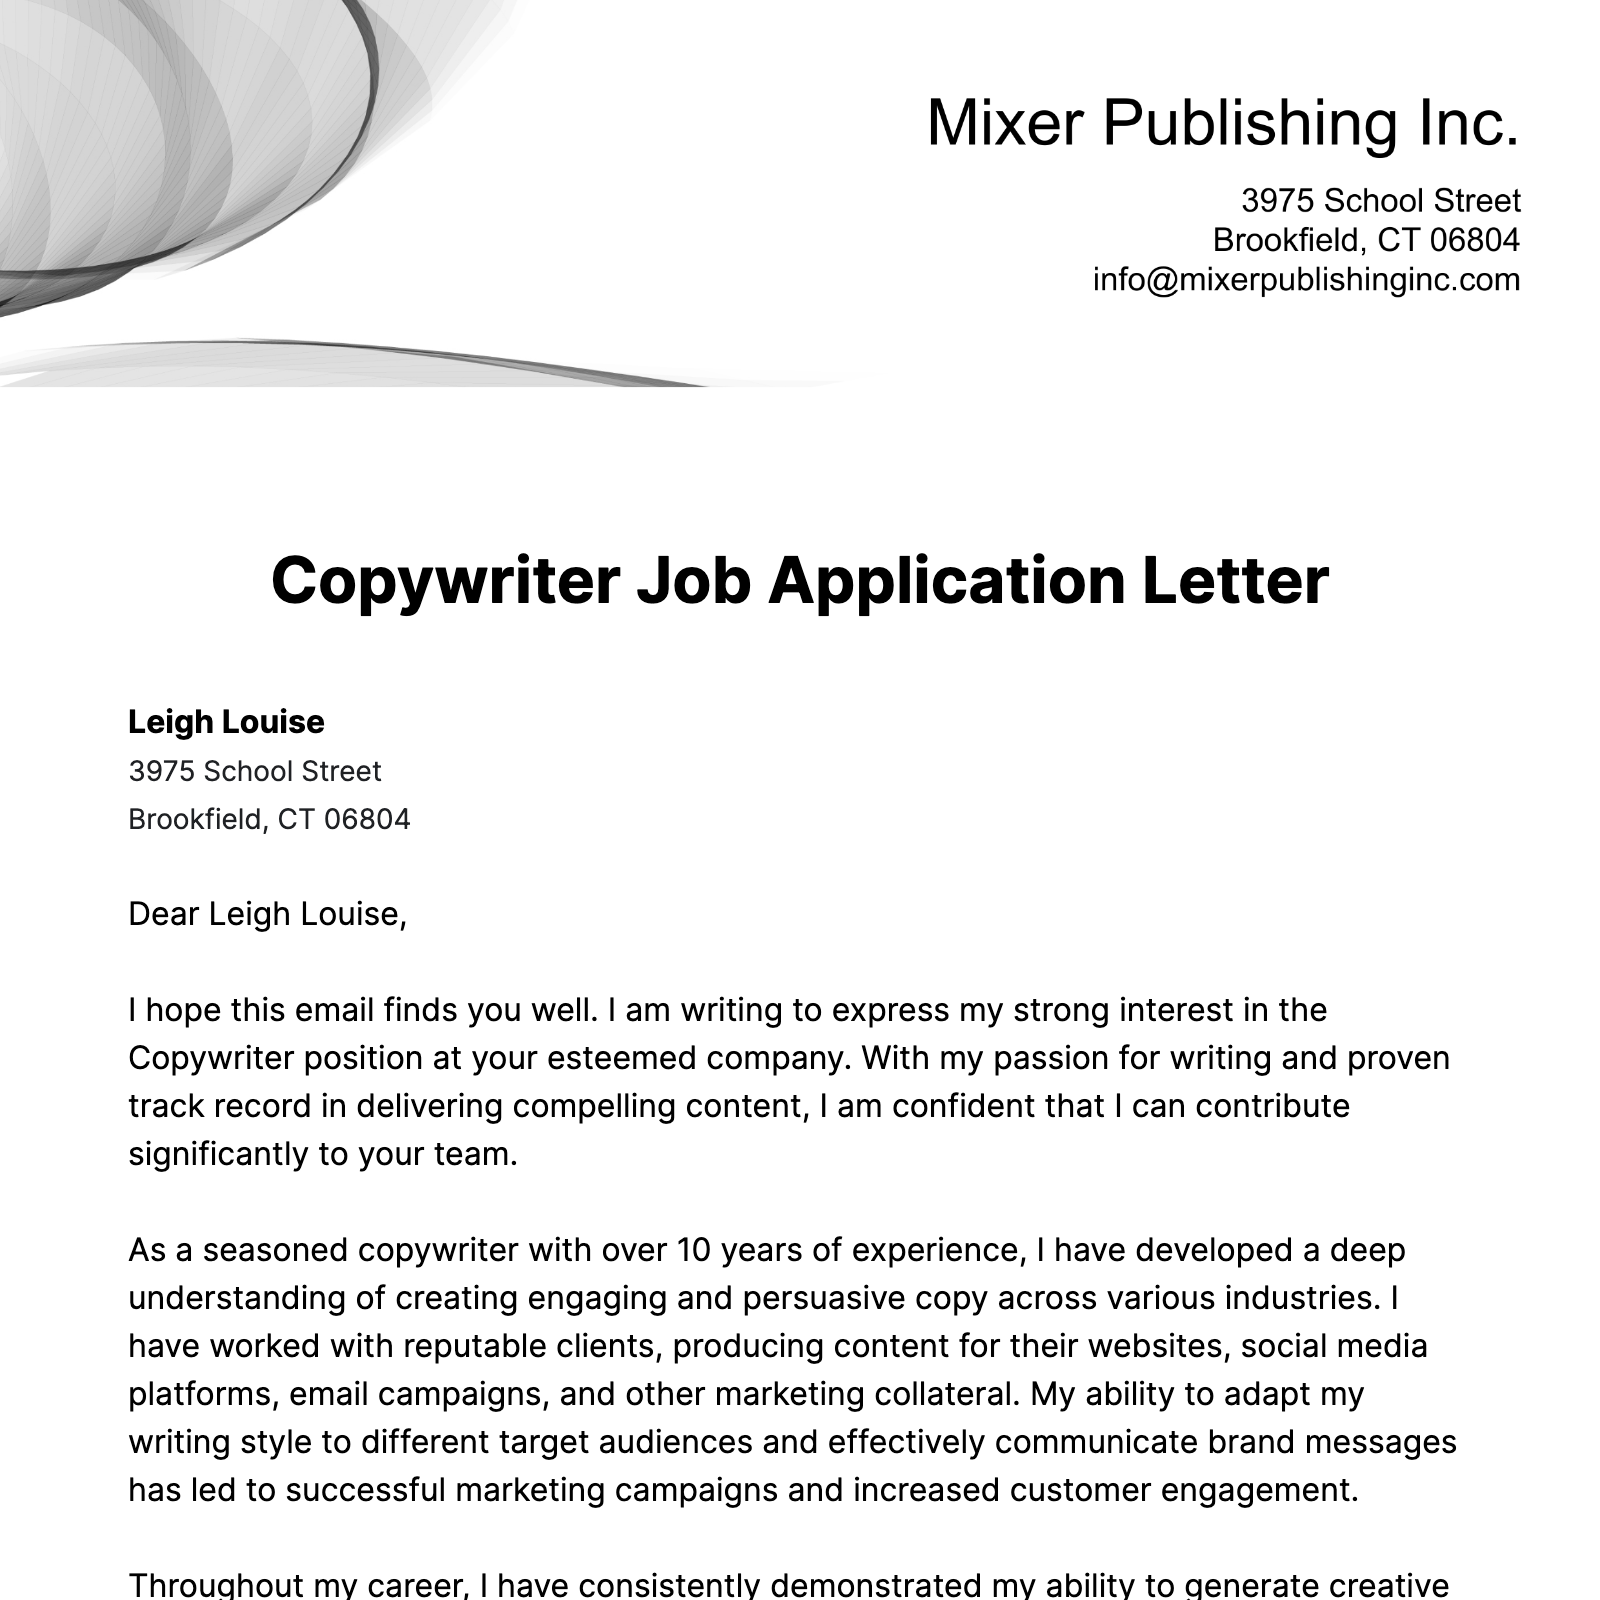 Copywriter Job Application Letter  Template